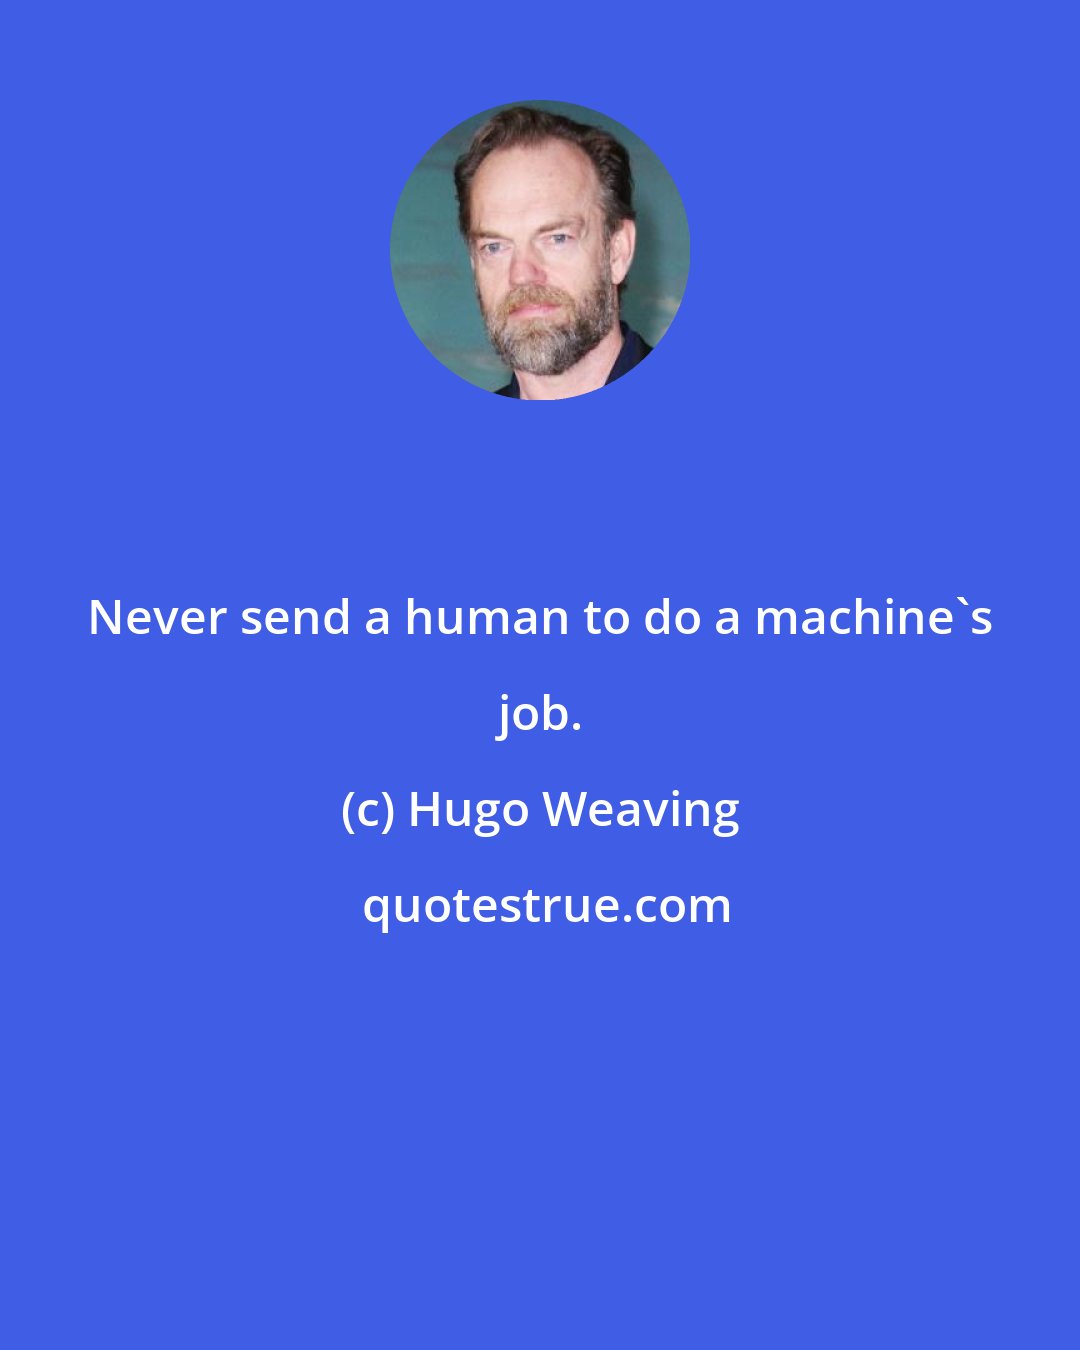 Hugo Weaving: Never send a human to do a machine's job.